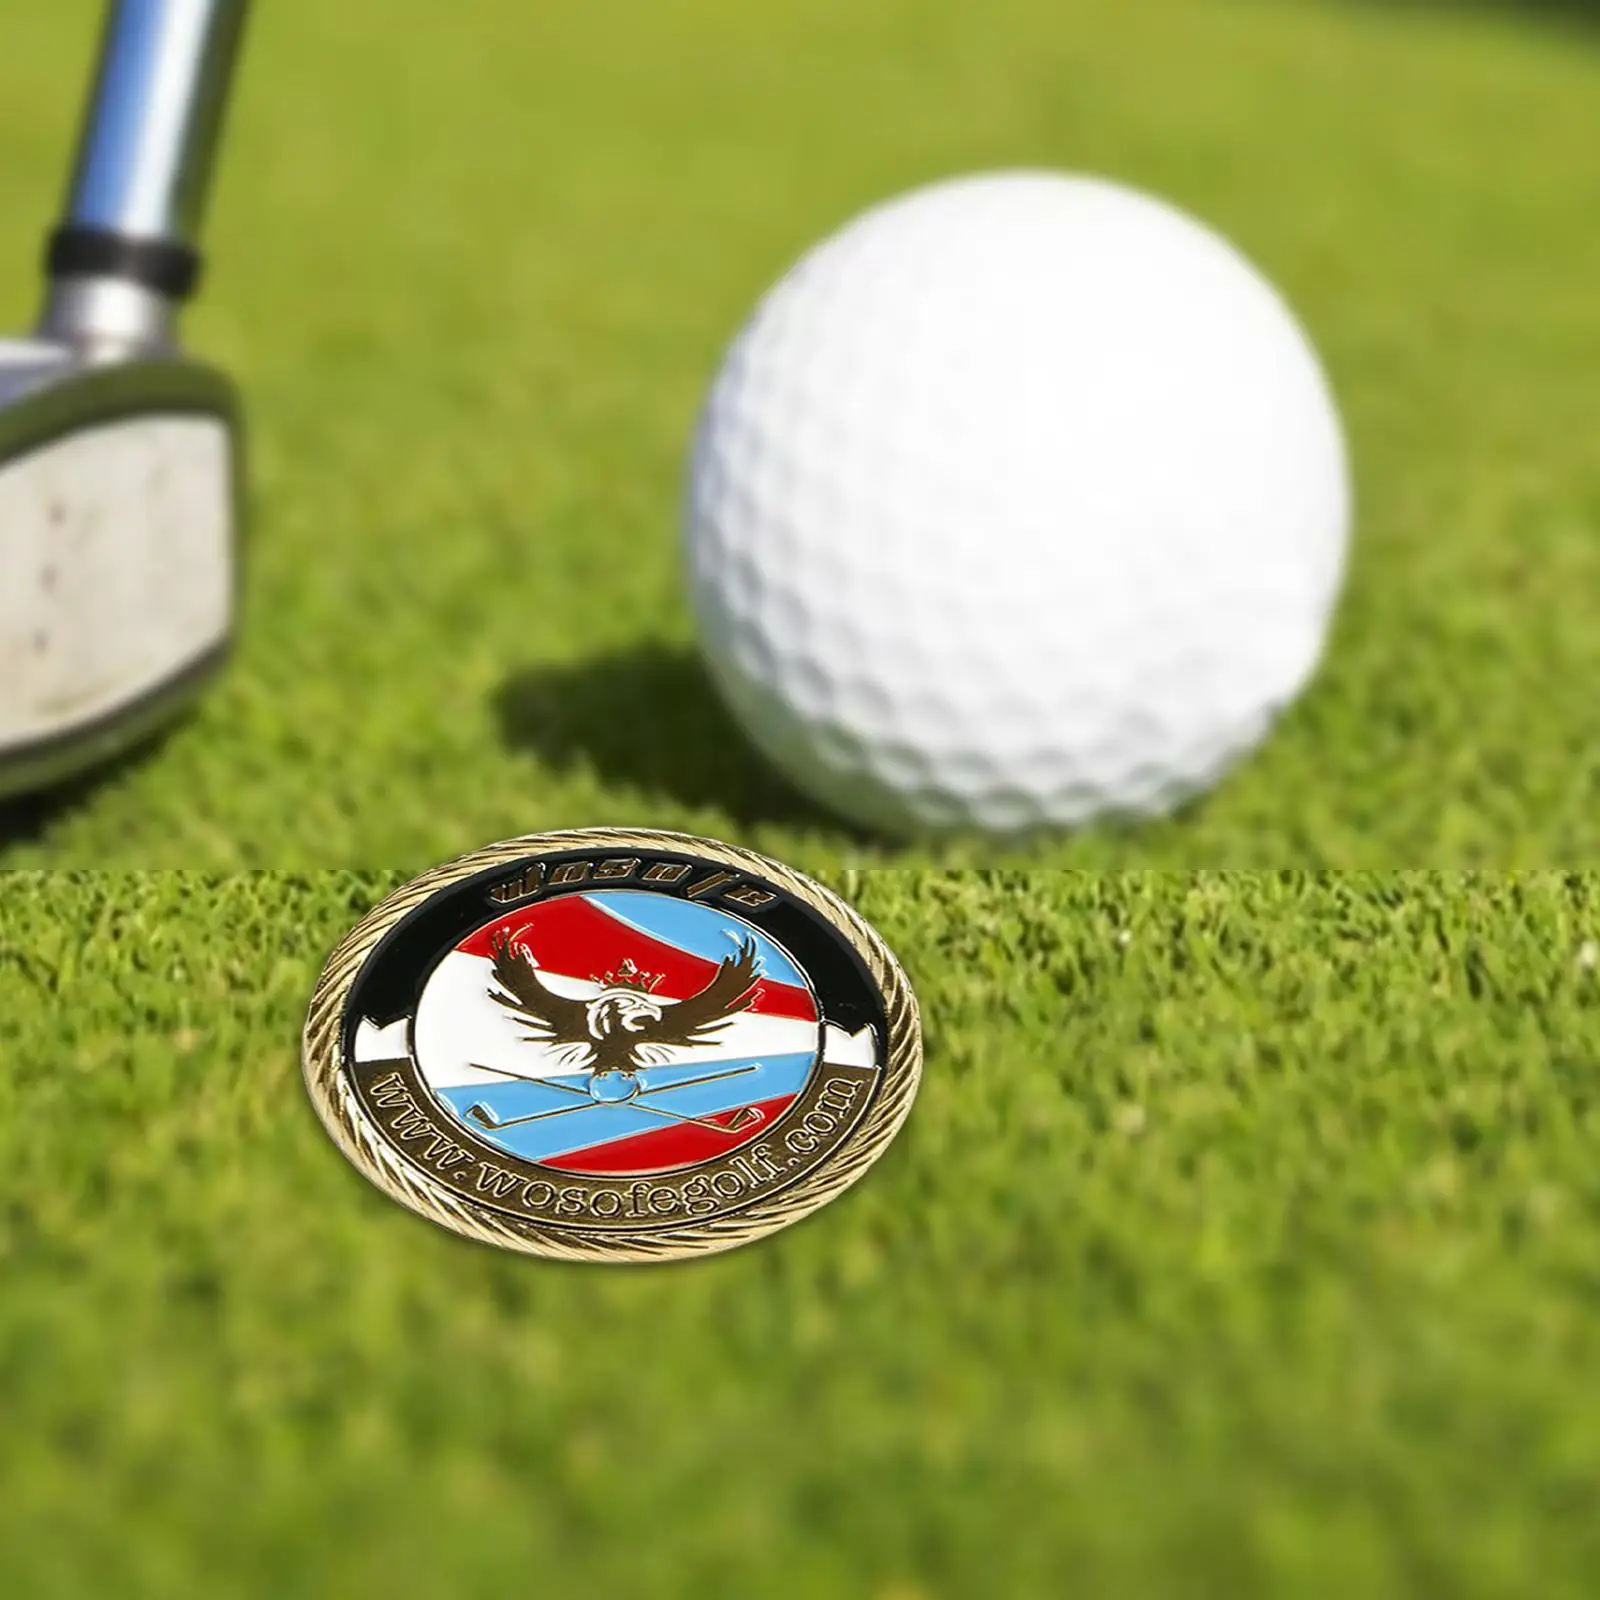 Funny Position Mark Club Putting Detachable Clip Golf Ball Marker Keepsake